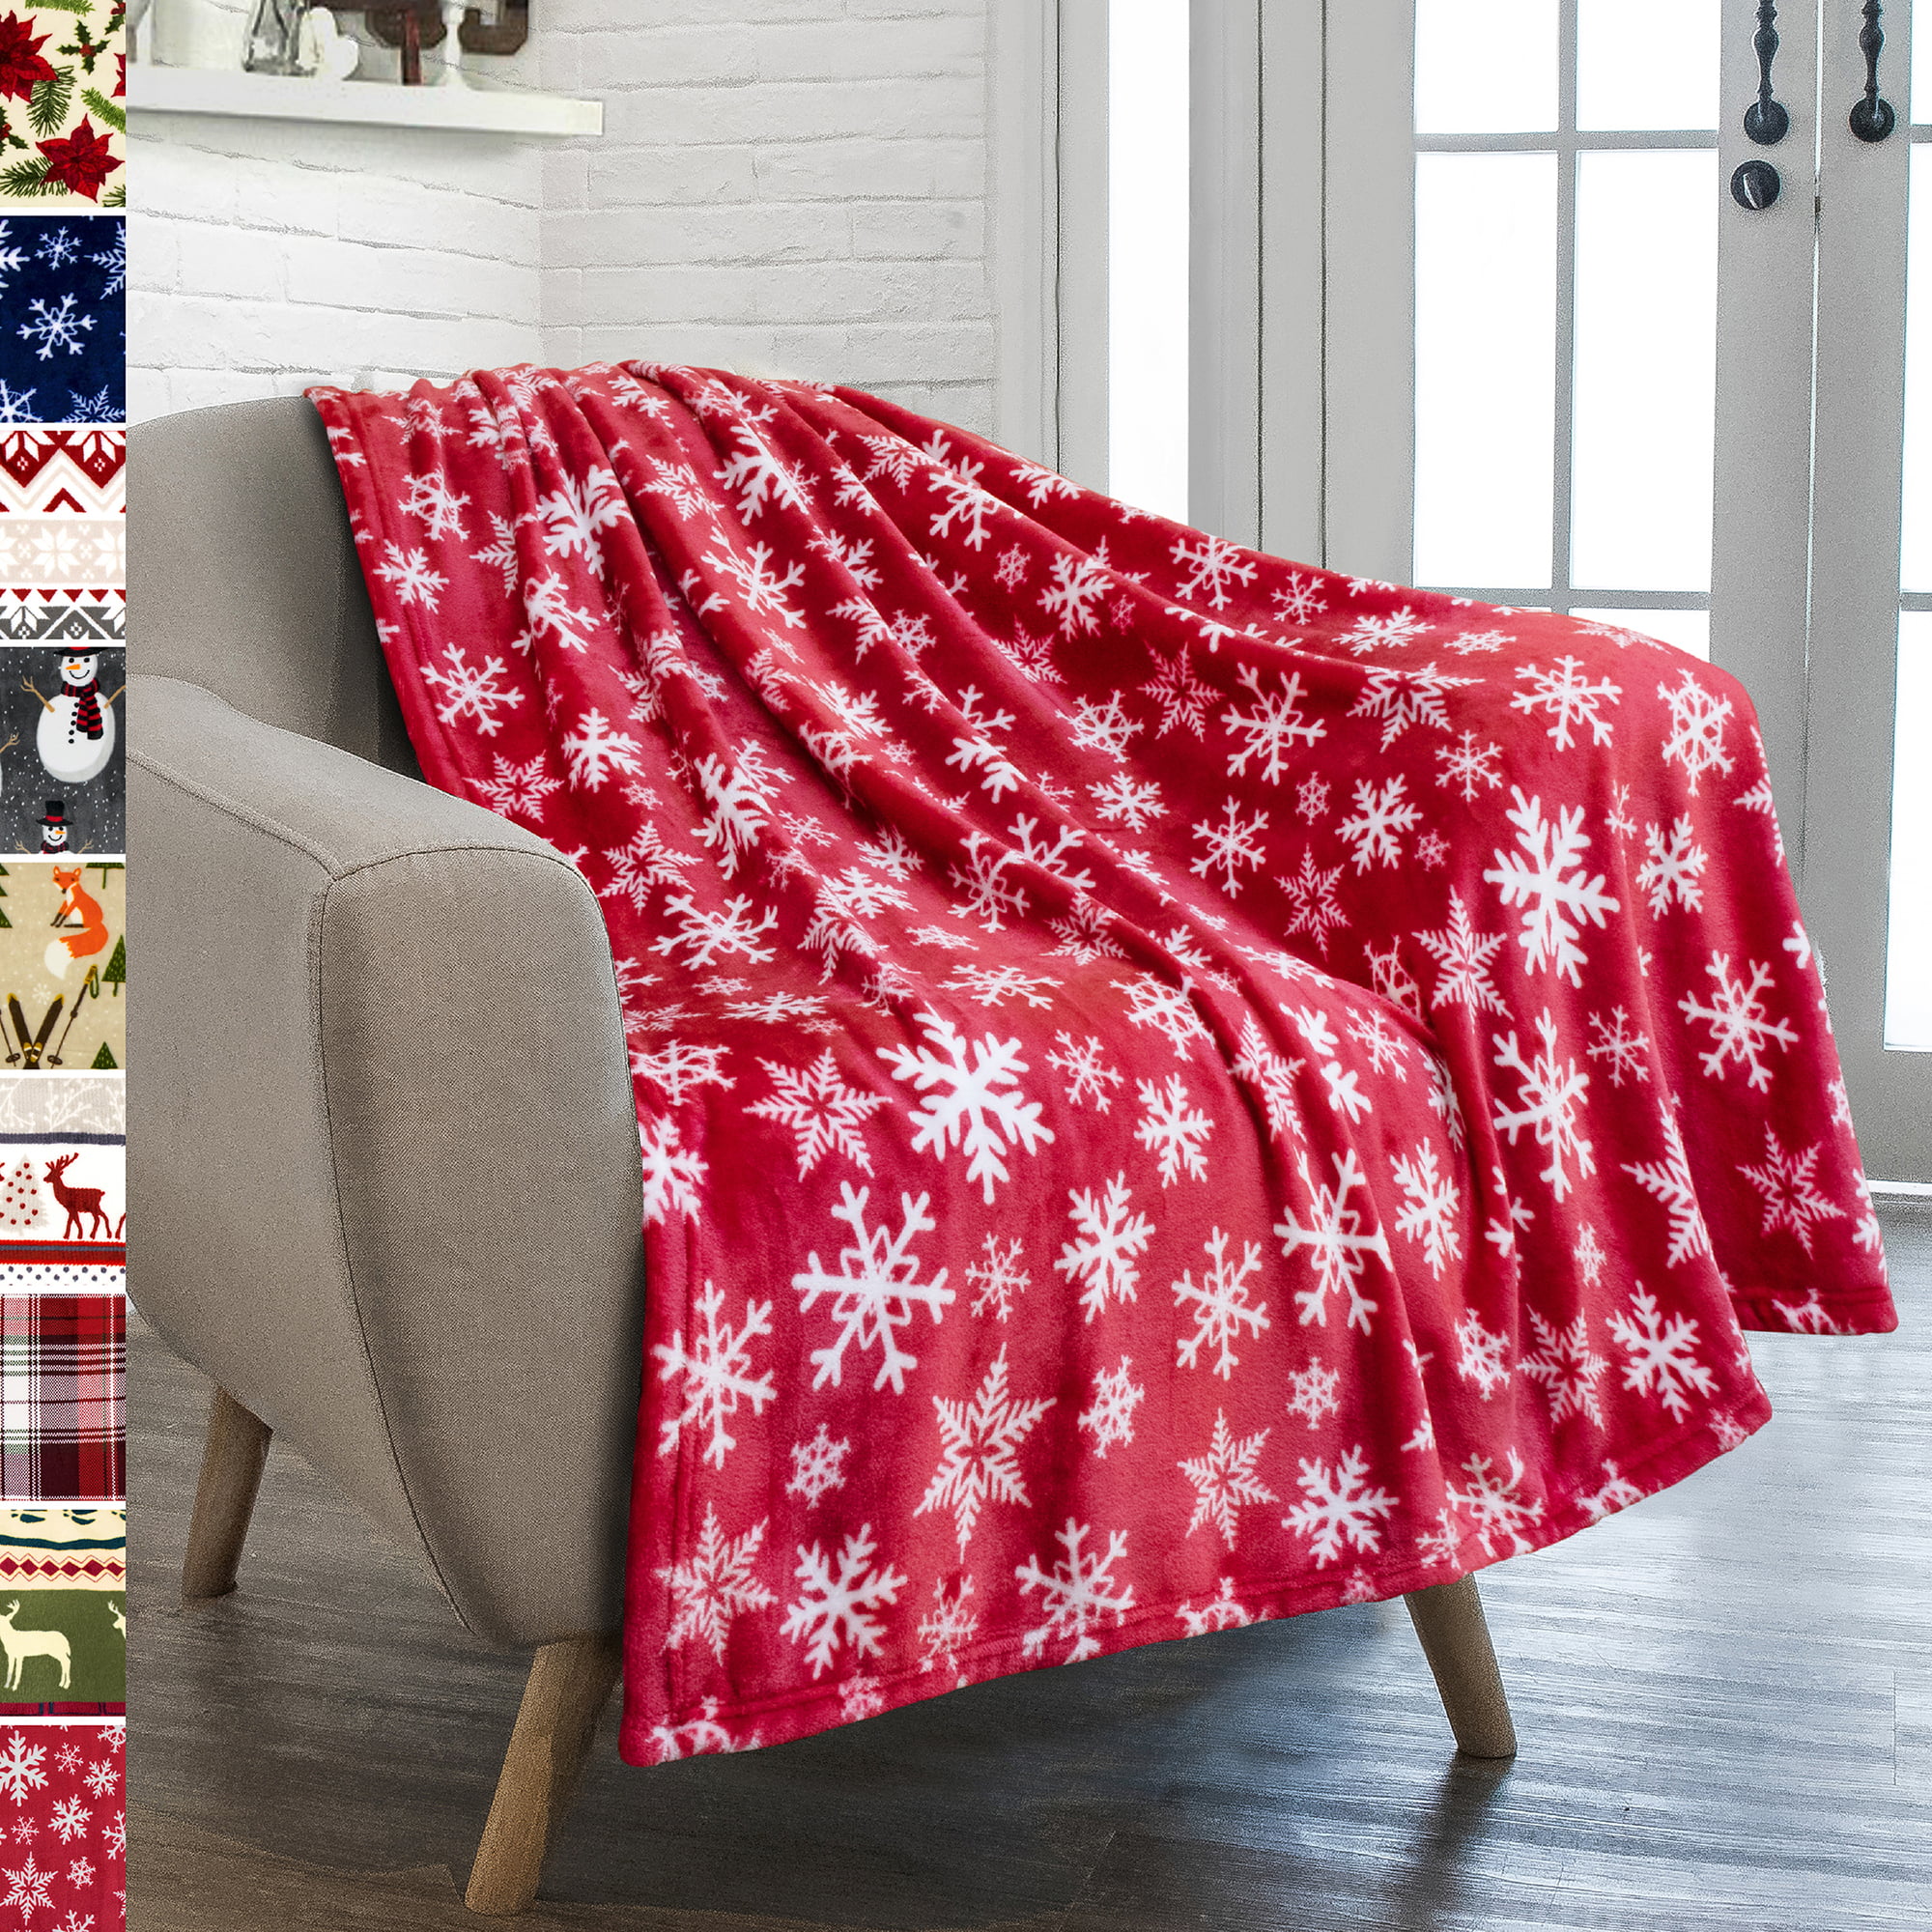 Fall Throw Blanket for Couch Christmas Knitt Pattern Winter Santa Snow Flakes Red Blue Fleece Blanket 80x60 